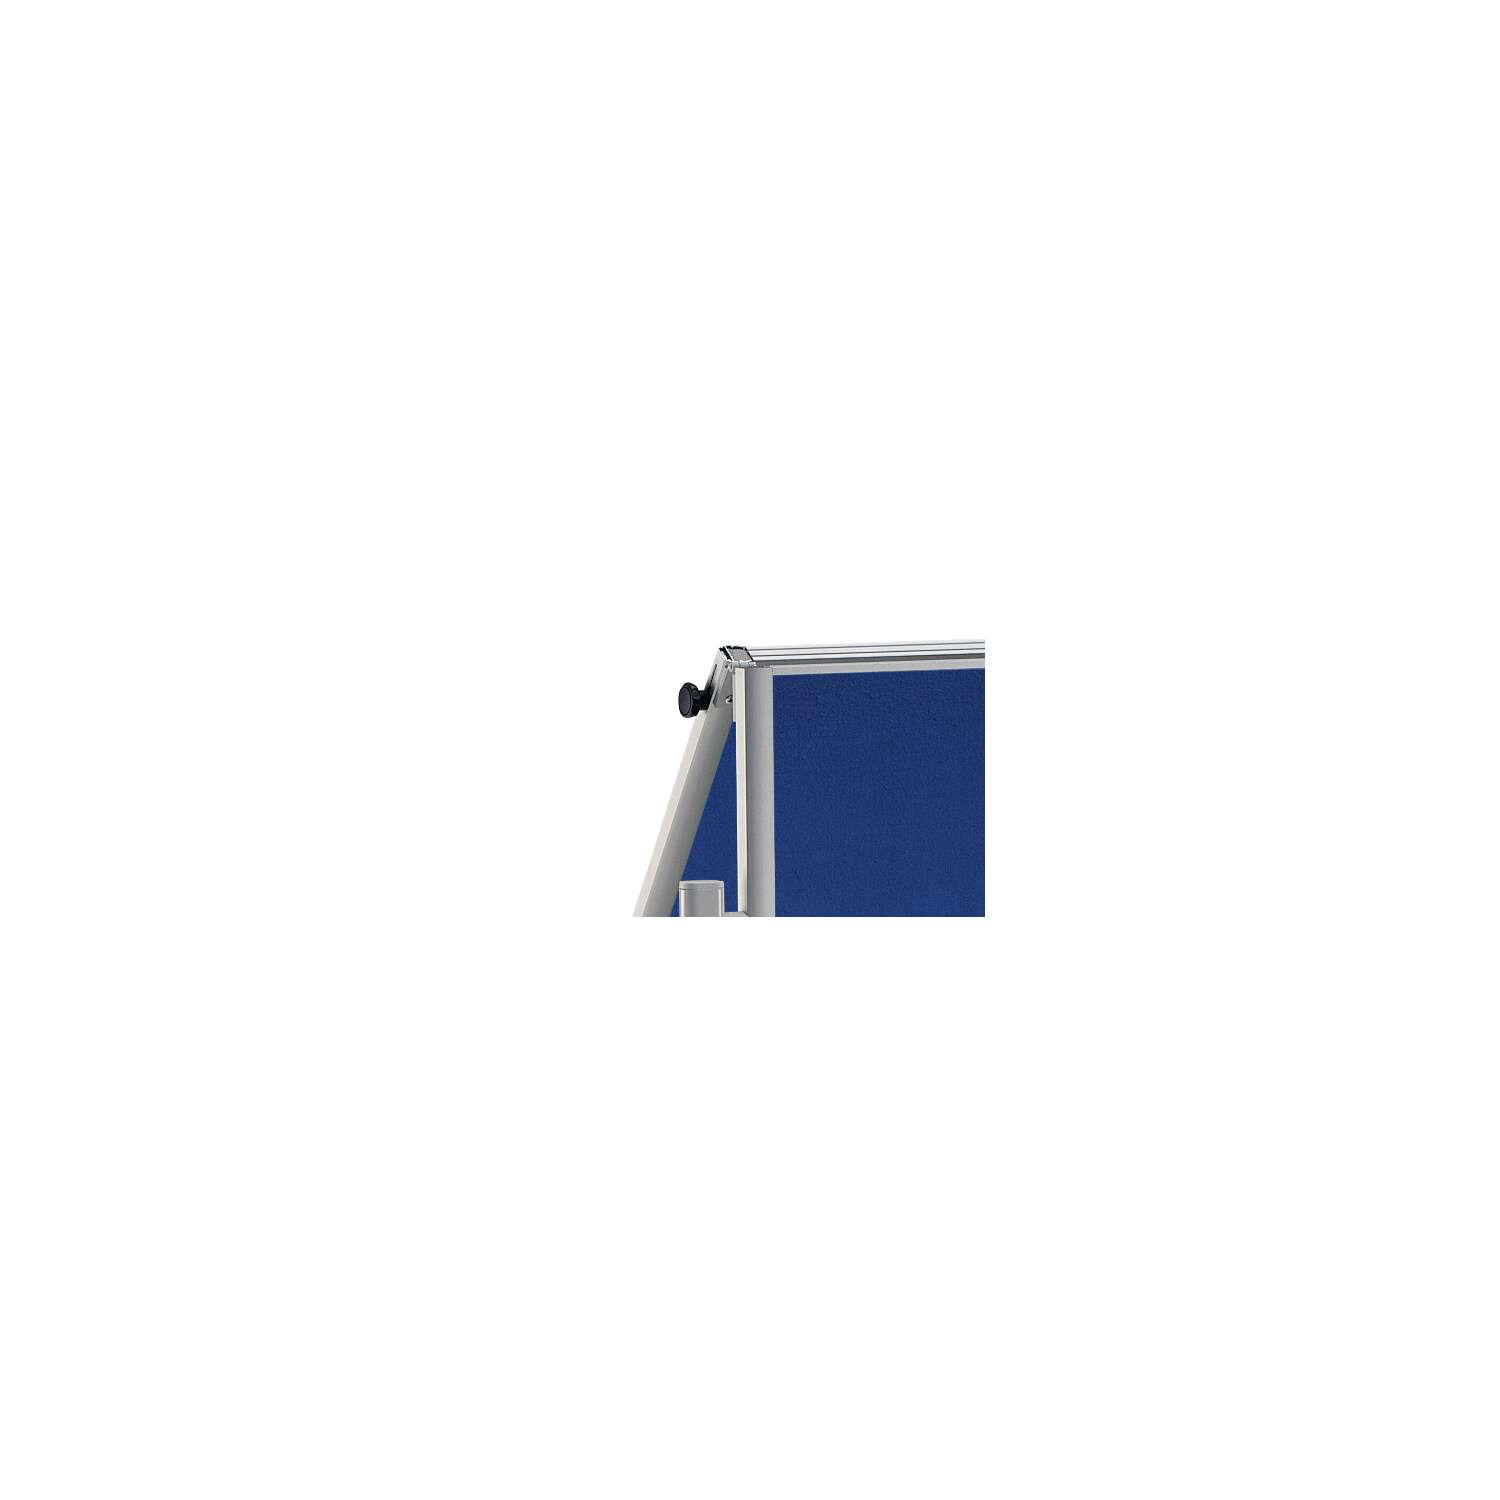 Moderationstafel MAULpro klappb. Textil blau, 150x120cm